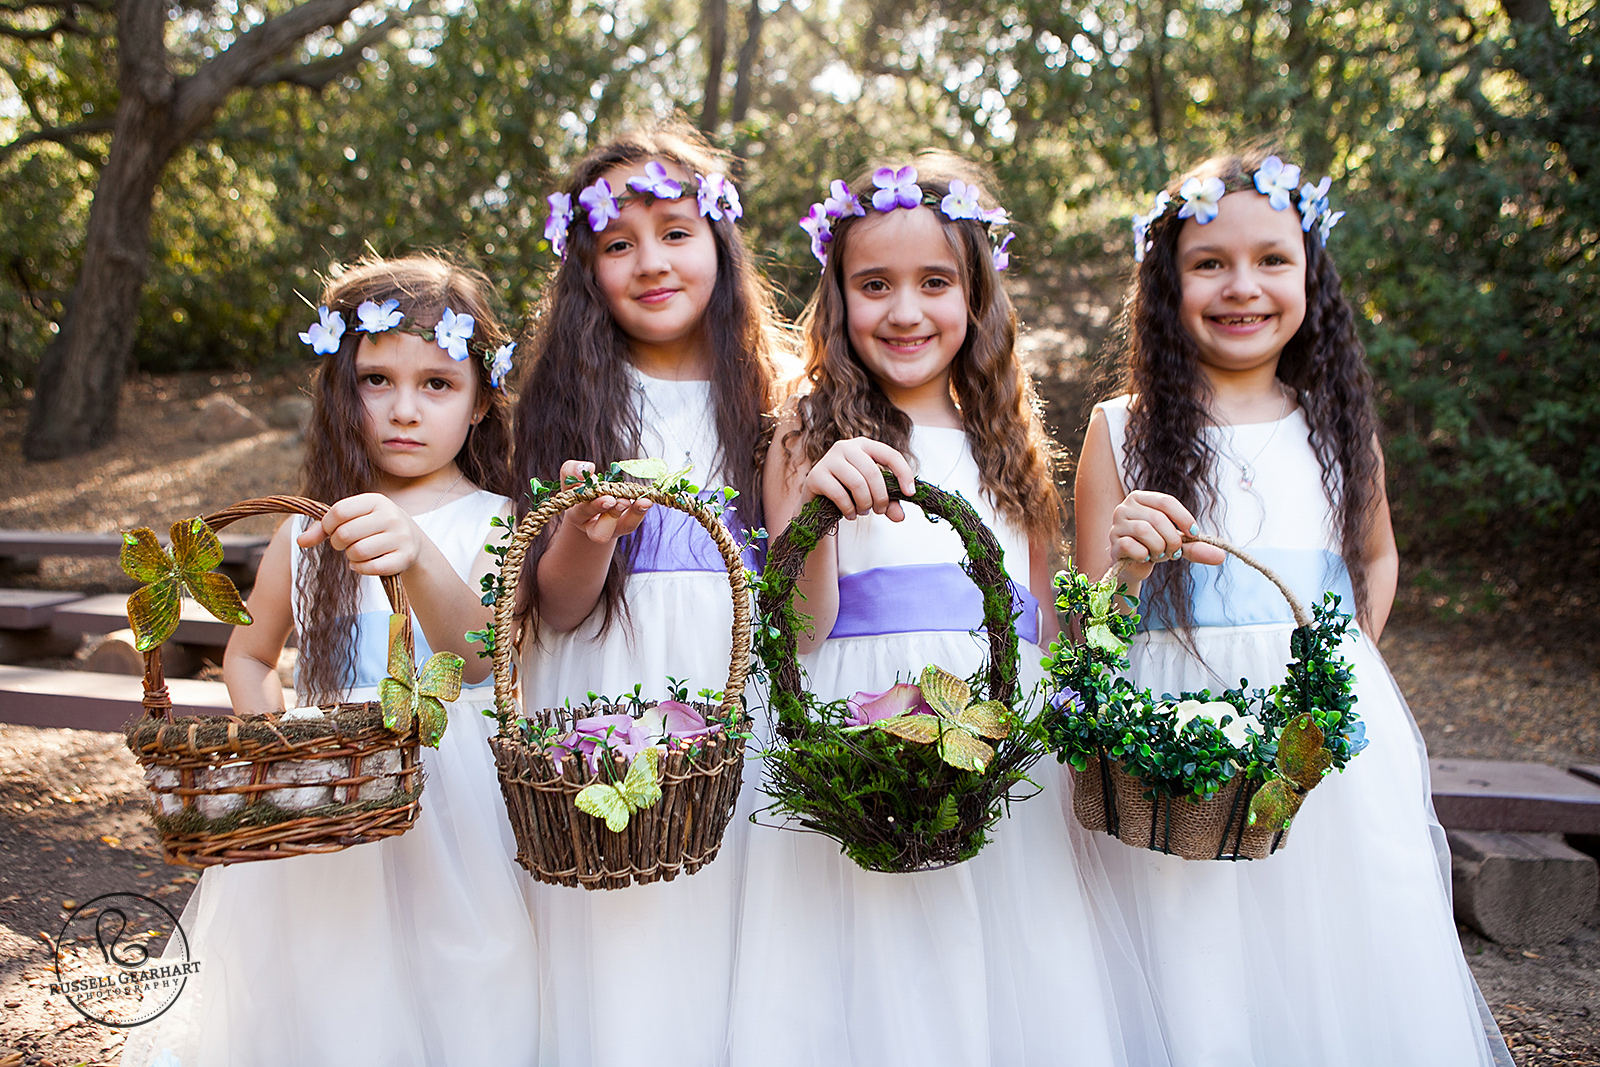 Fairy Flower Girls – Anaheim Hills Outdoor Wedding  – Russell Gearhart Photography – www.gearhartphoto.com   